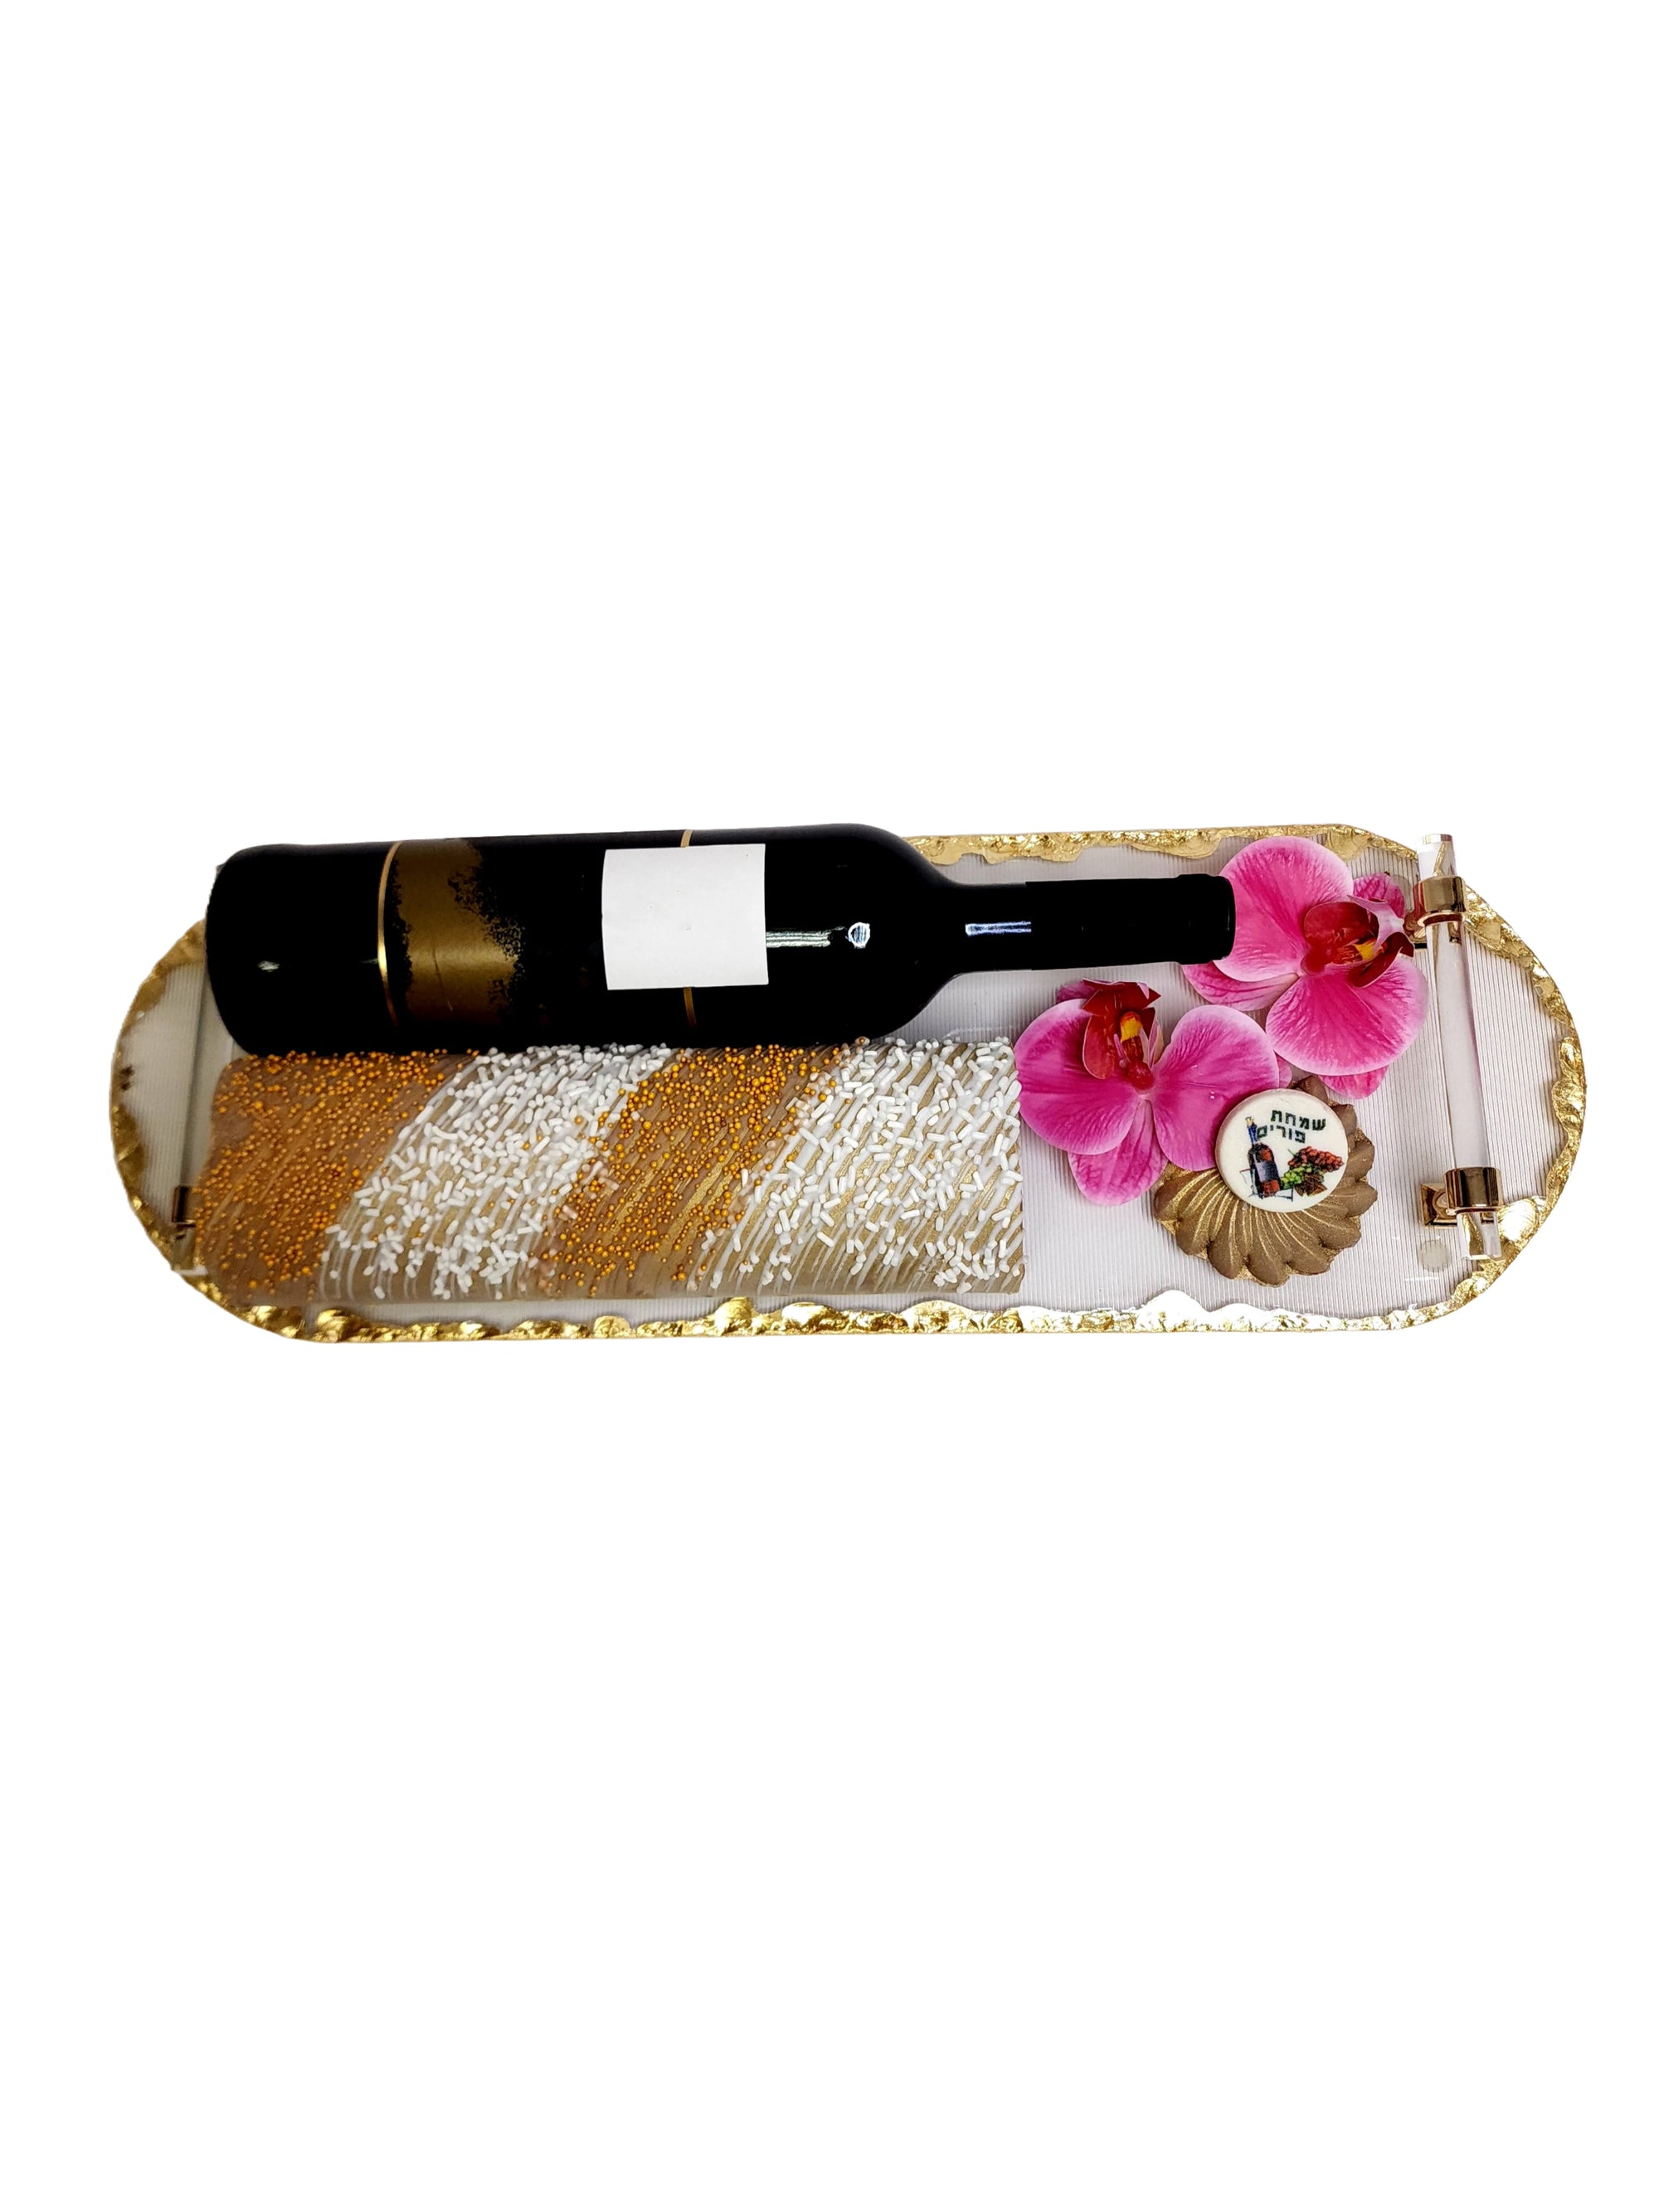 Purim Gift Elegant Tray With Handle Chocolate Log Basket Mishloach Manos